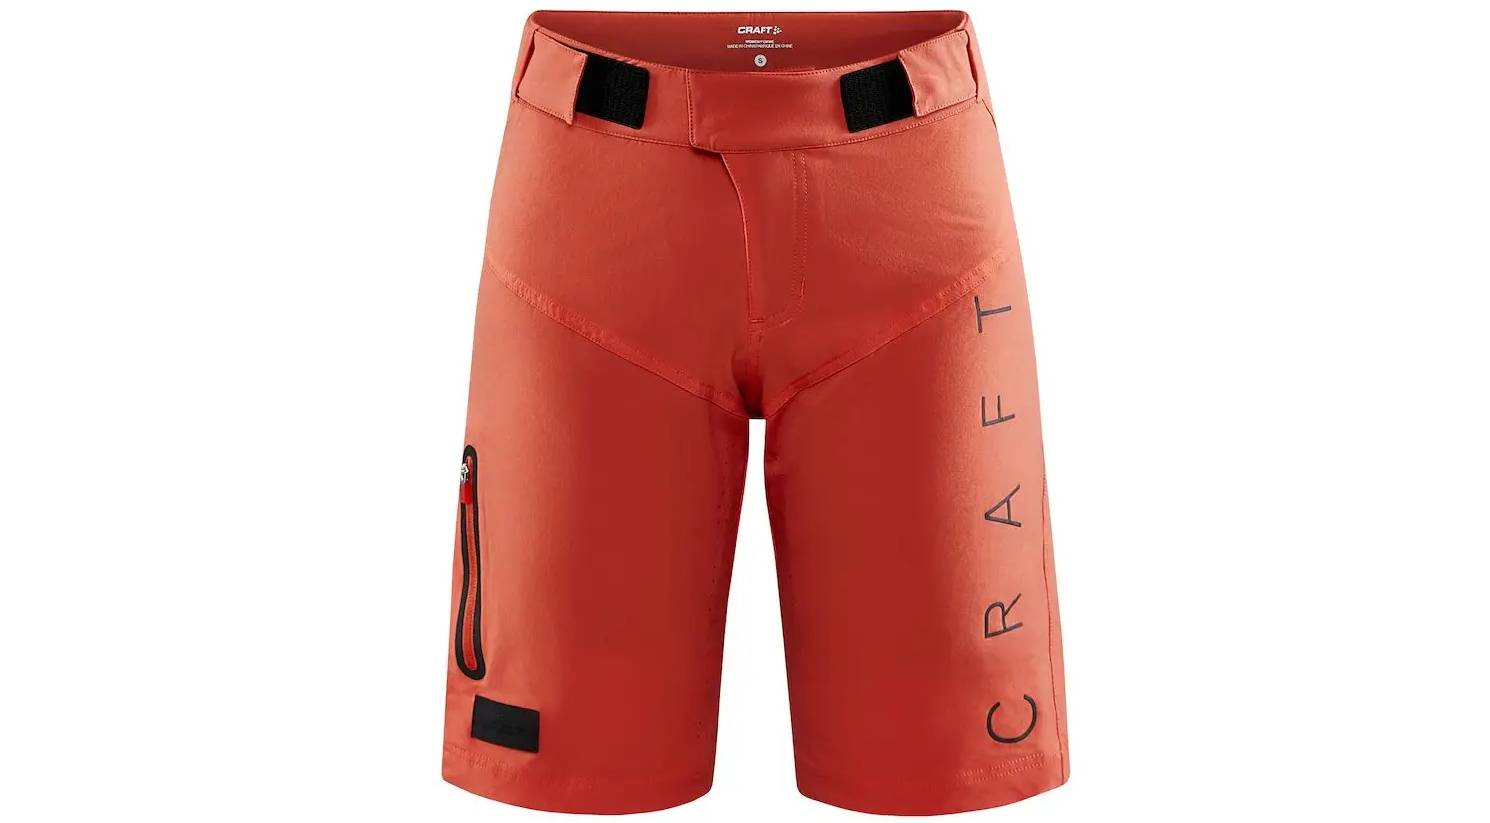 Фотография Велошорты Craft ADV Offroad XT Shorts with Pad женские, размер L, сезон SS 21, оранжевый 